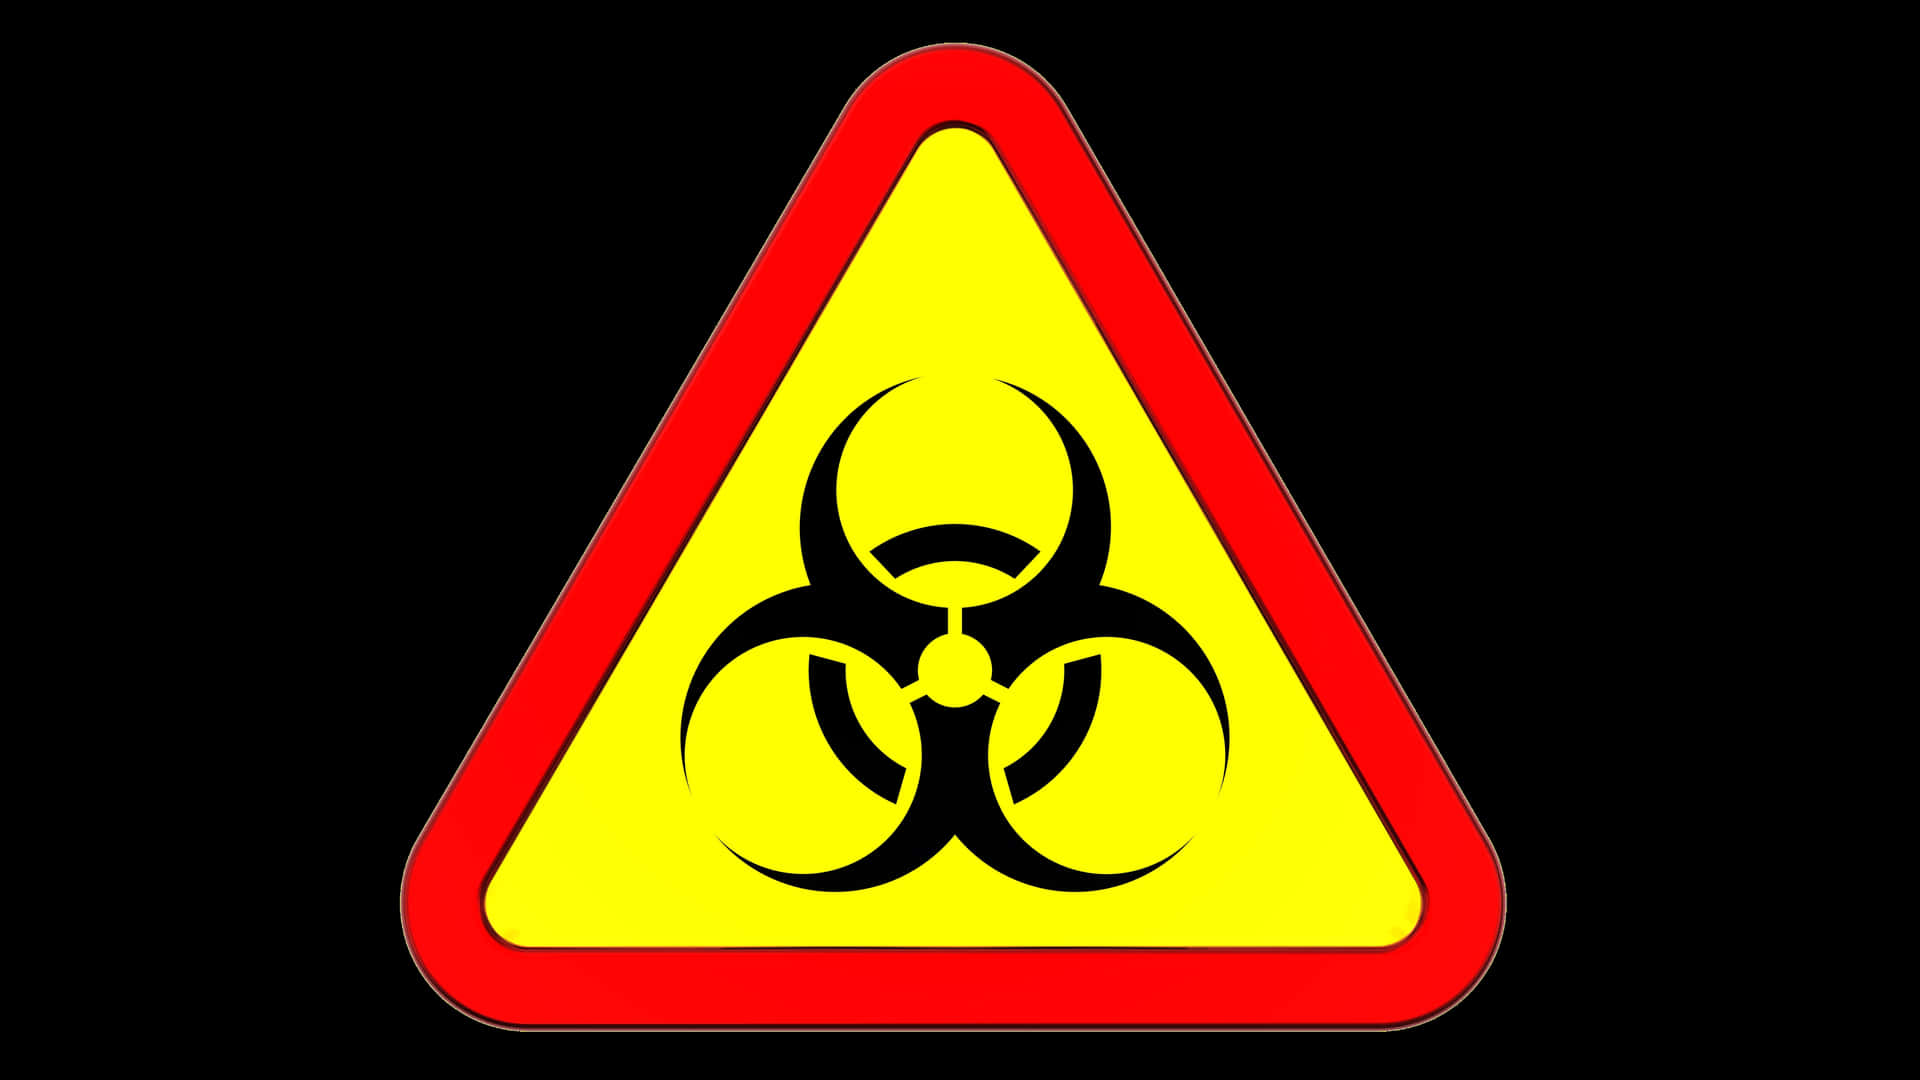 Triangle Toxic Biohazard Symbol Wallpaper